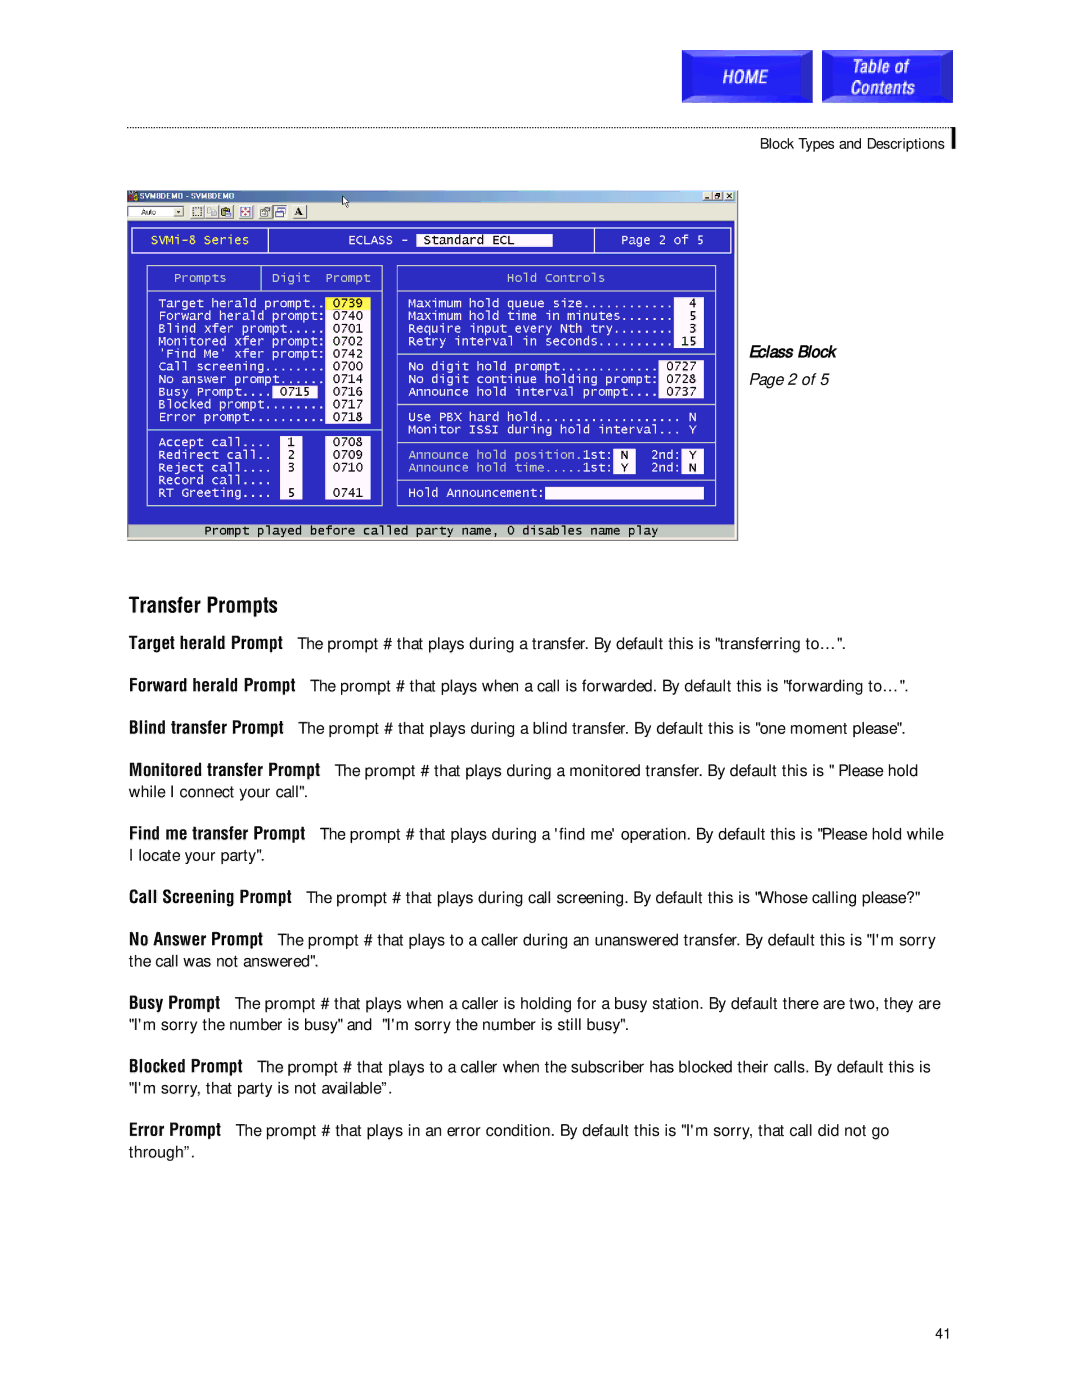 Samsung SVMi-8 technical manual Transfer Prompts 